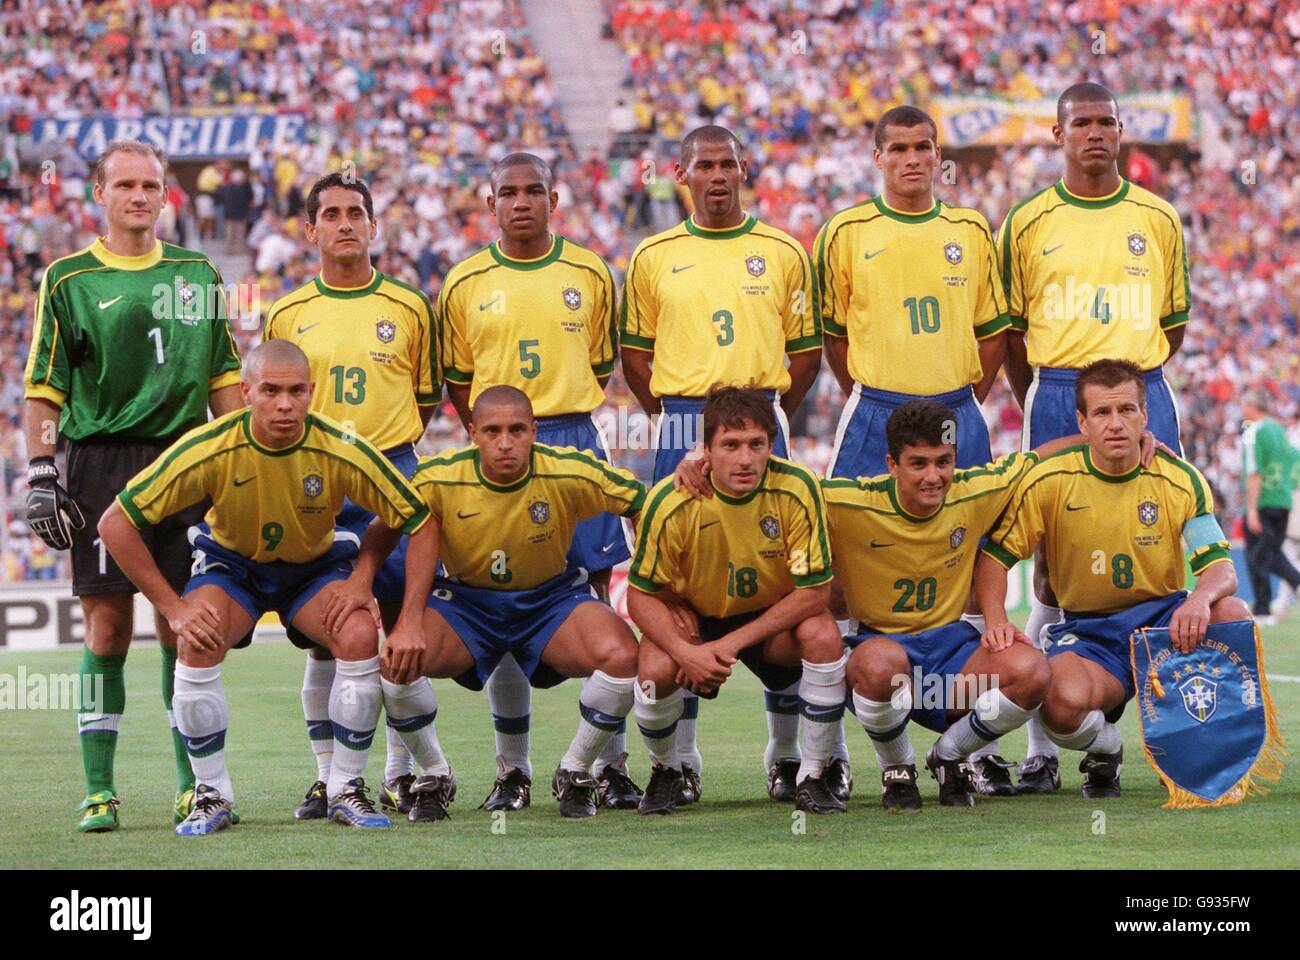 https://c8.alamy.com/comp/G935FW/soccer-world-cup-france-98-semi-final-brazil-v-holland-brazil-team-G935FW.jpg